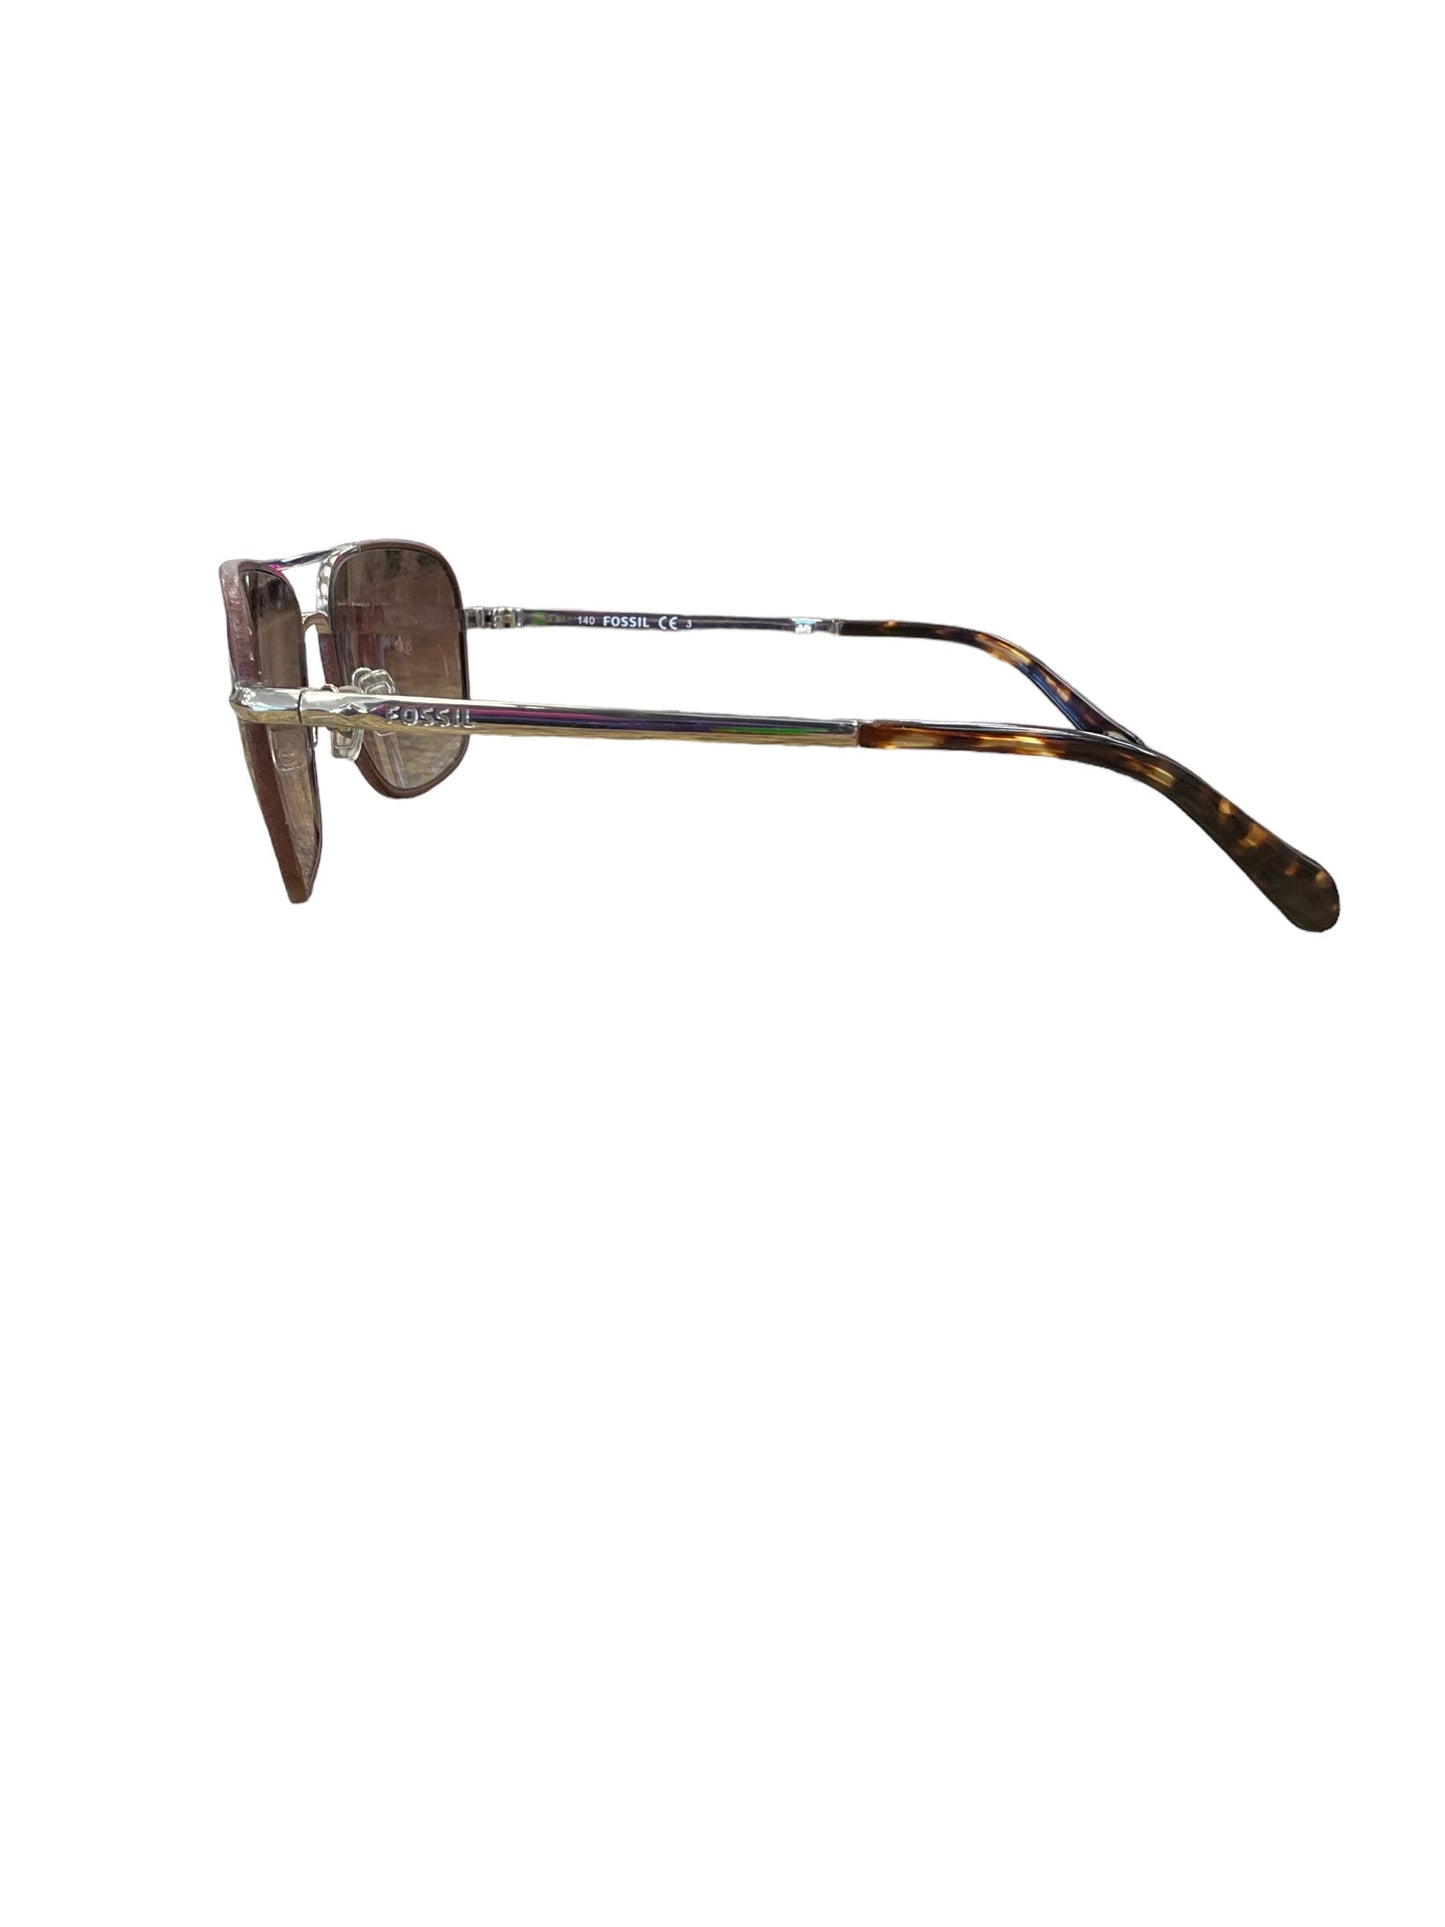 Sunglasses Fossil, Size 02 Piece